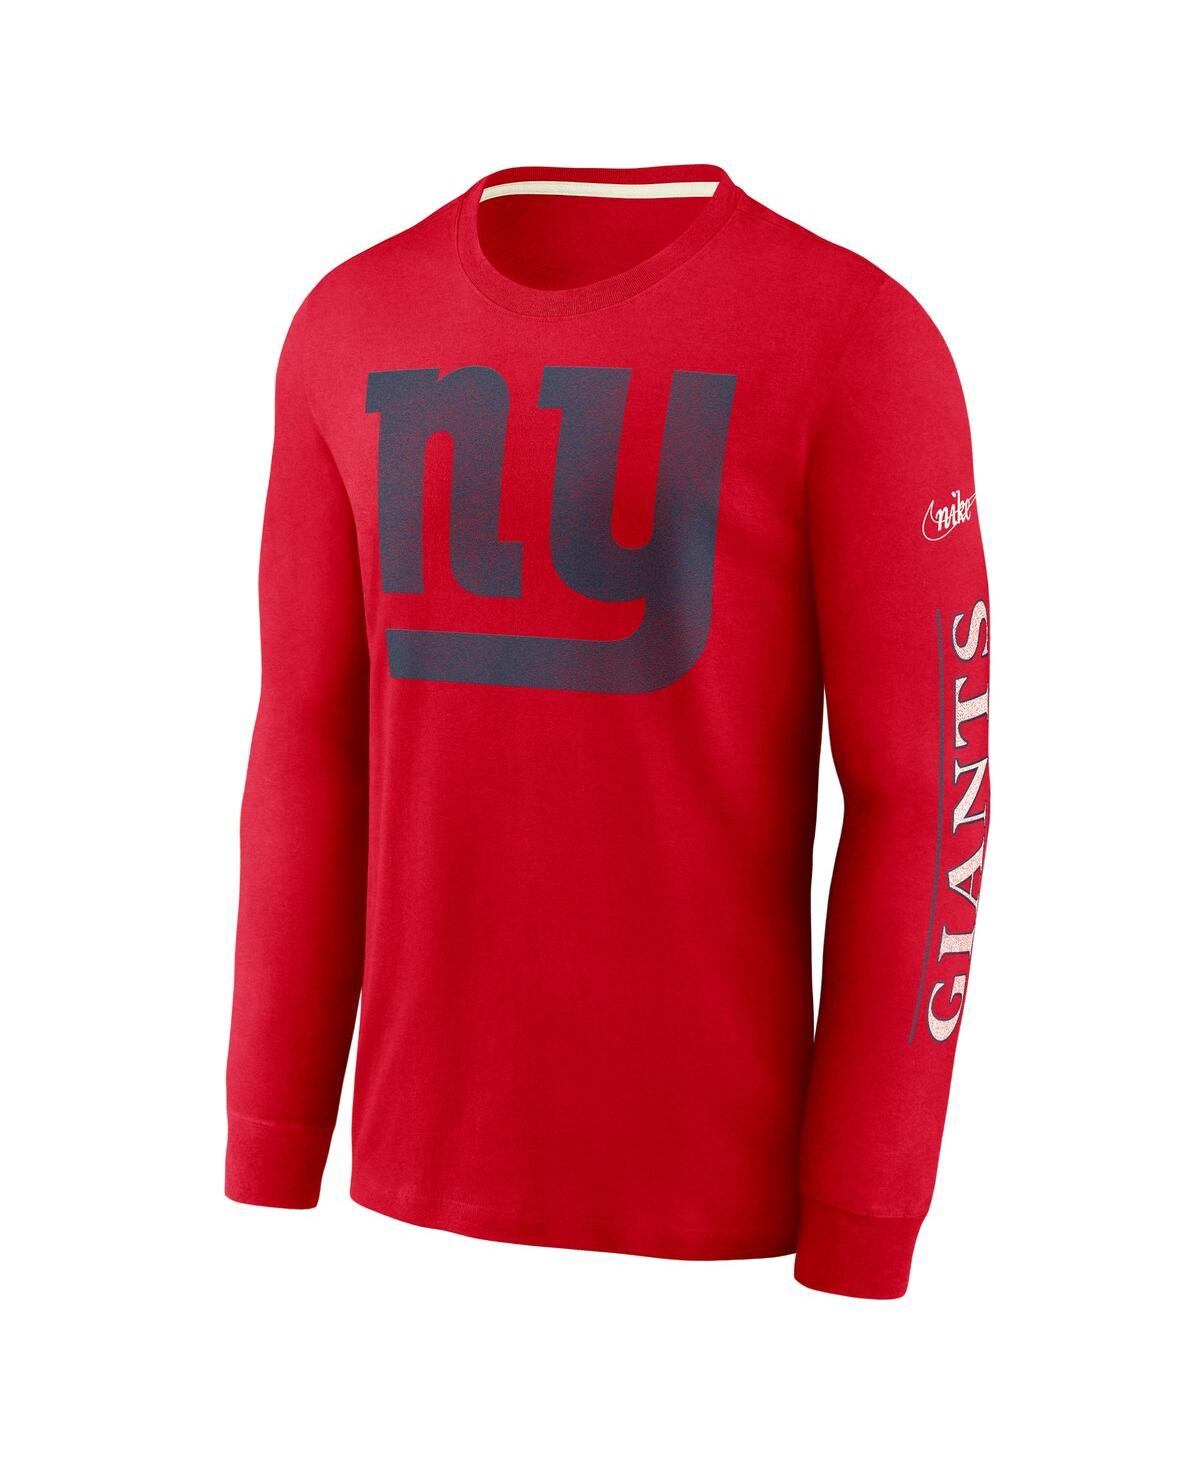 Shop Nike Men's  Red New York Giants Fashion Tri-blend Long Sleeve T-shirt